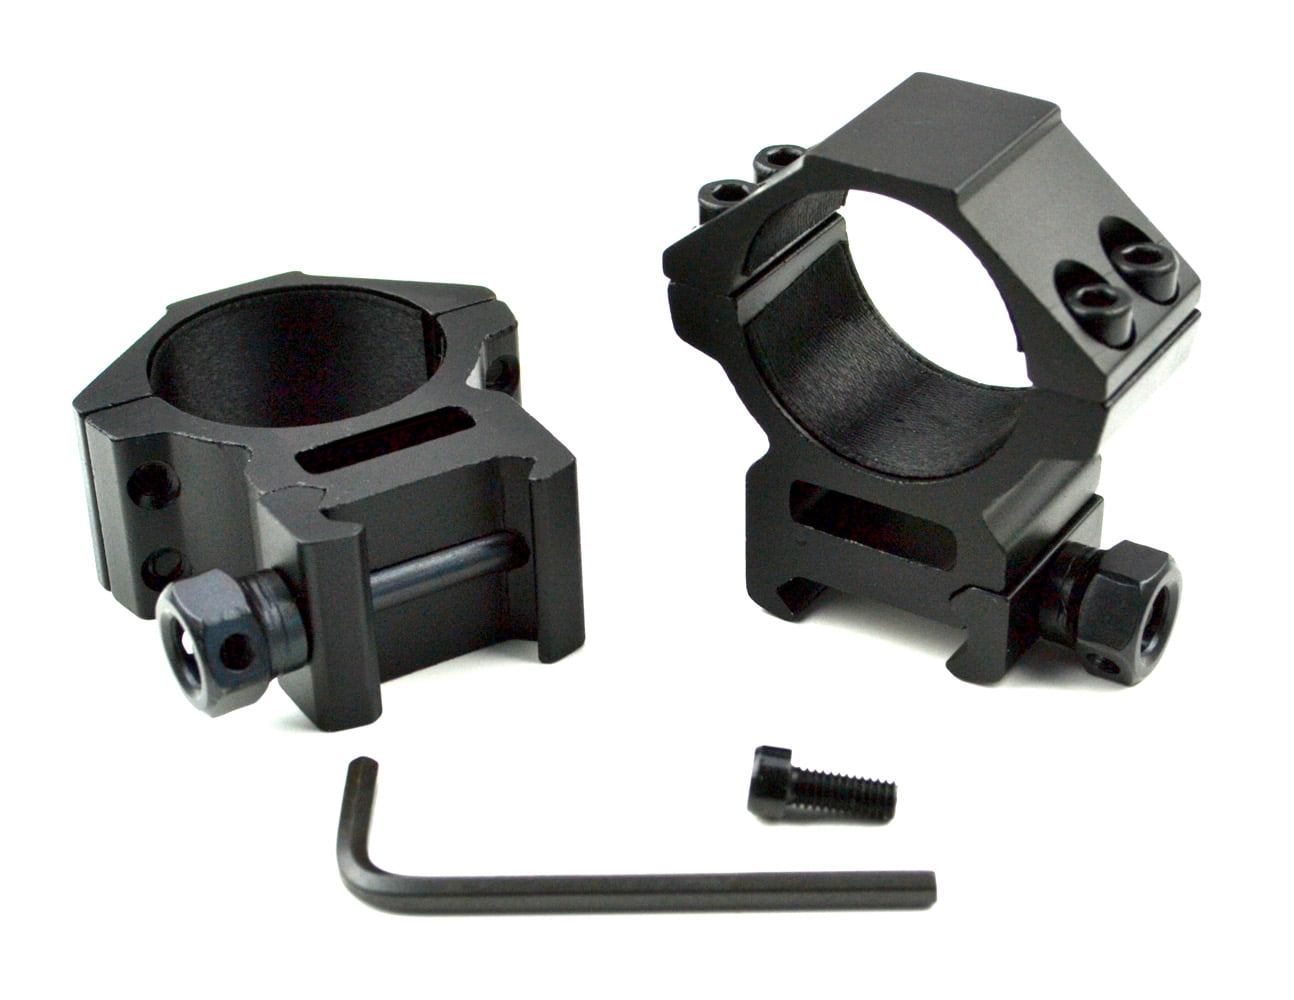 2PCs/ Set Tactical 30mm Ring 21MM Rail Scope Mounts For Hunting Riflescope 